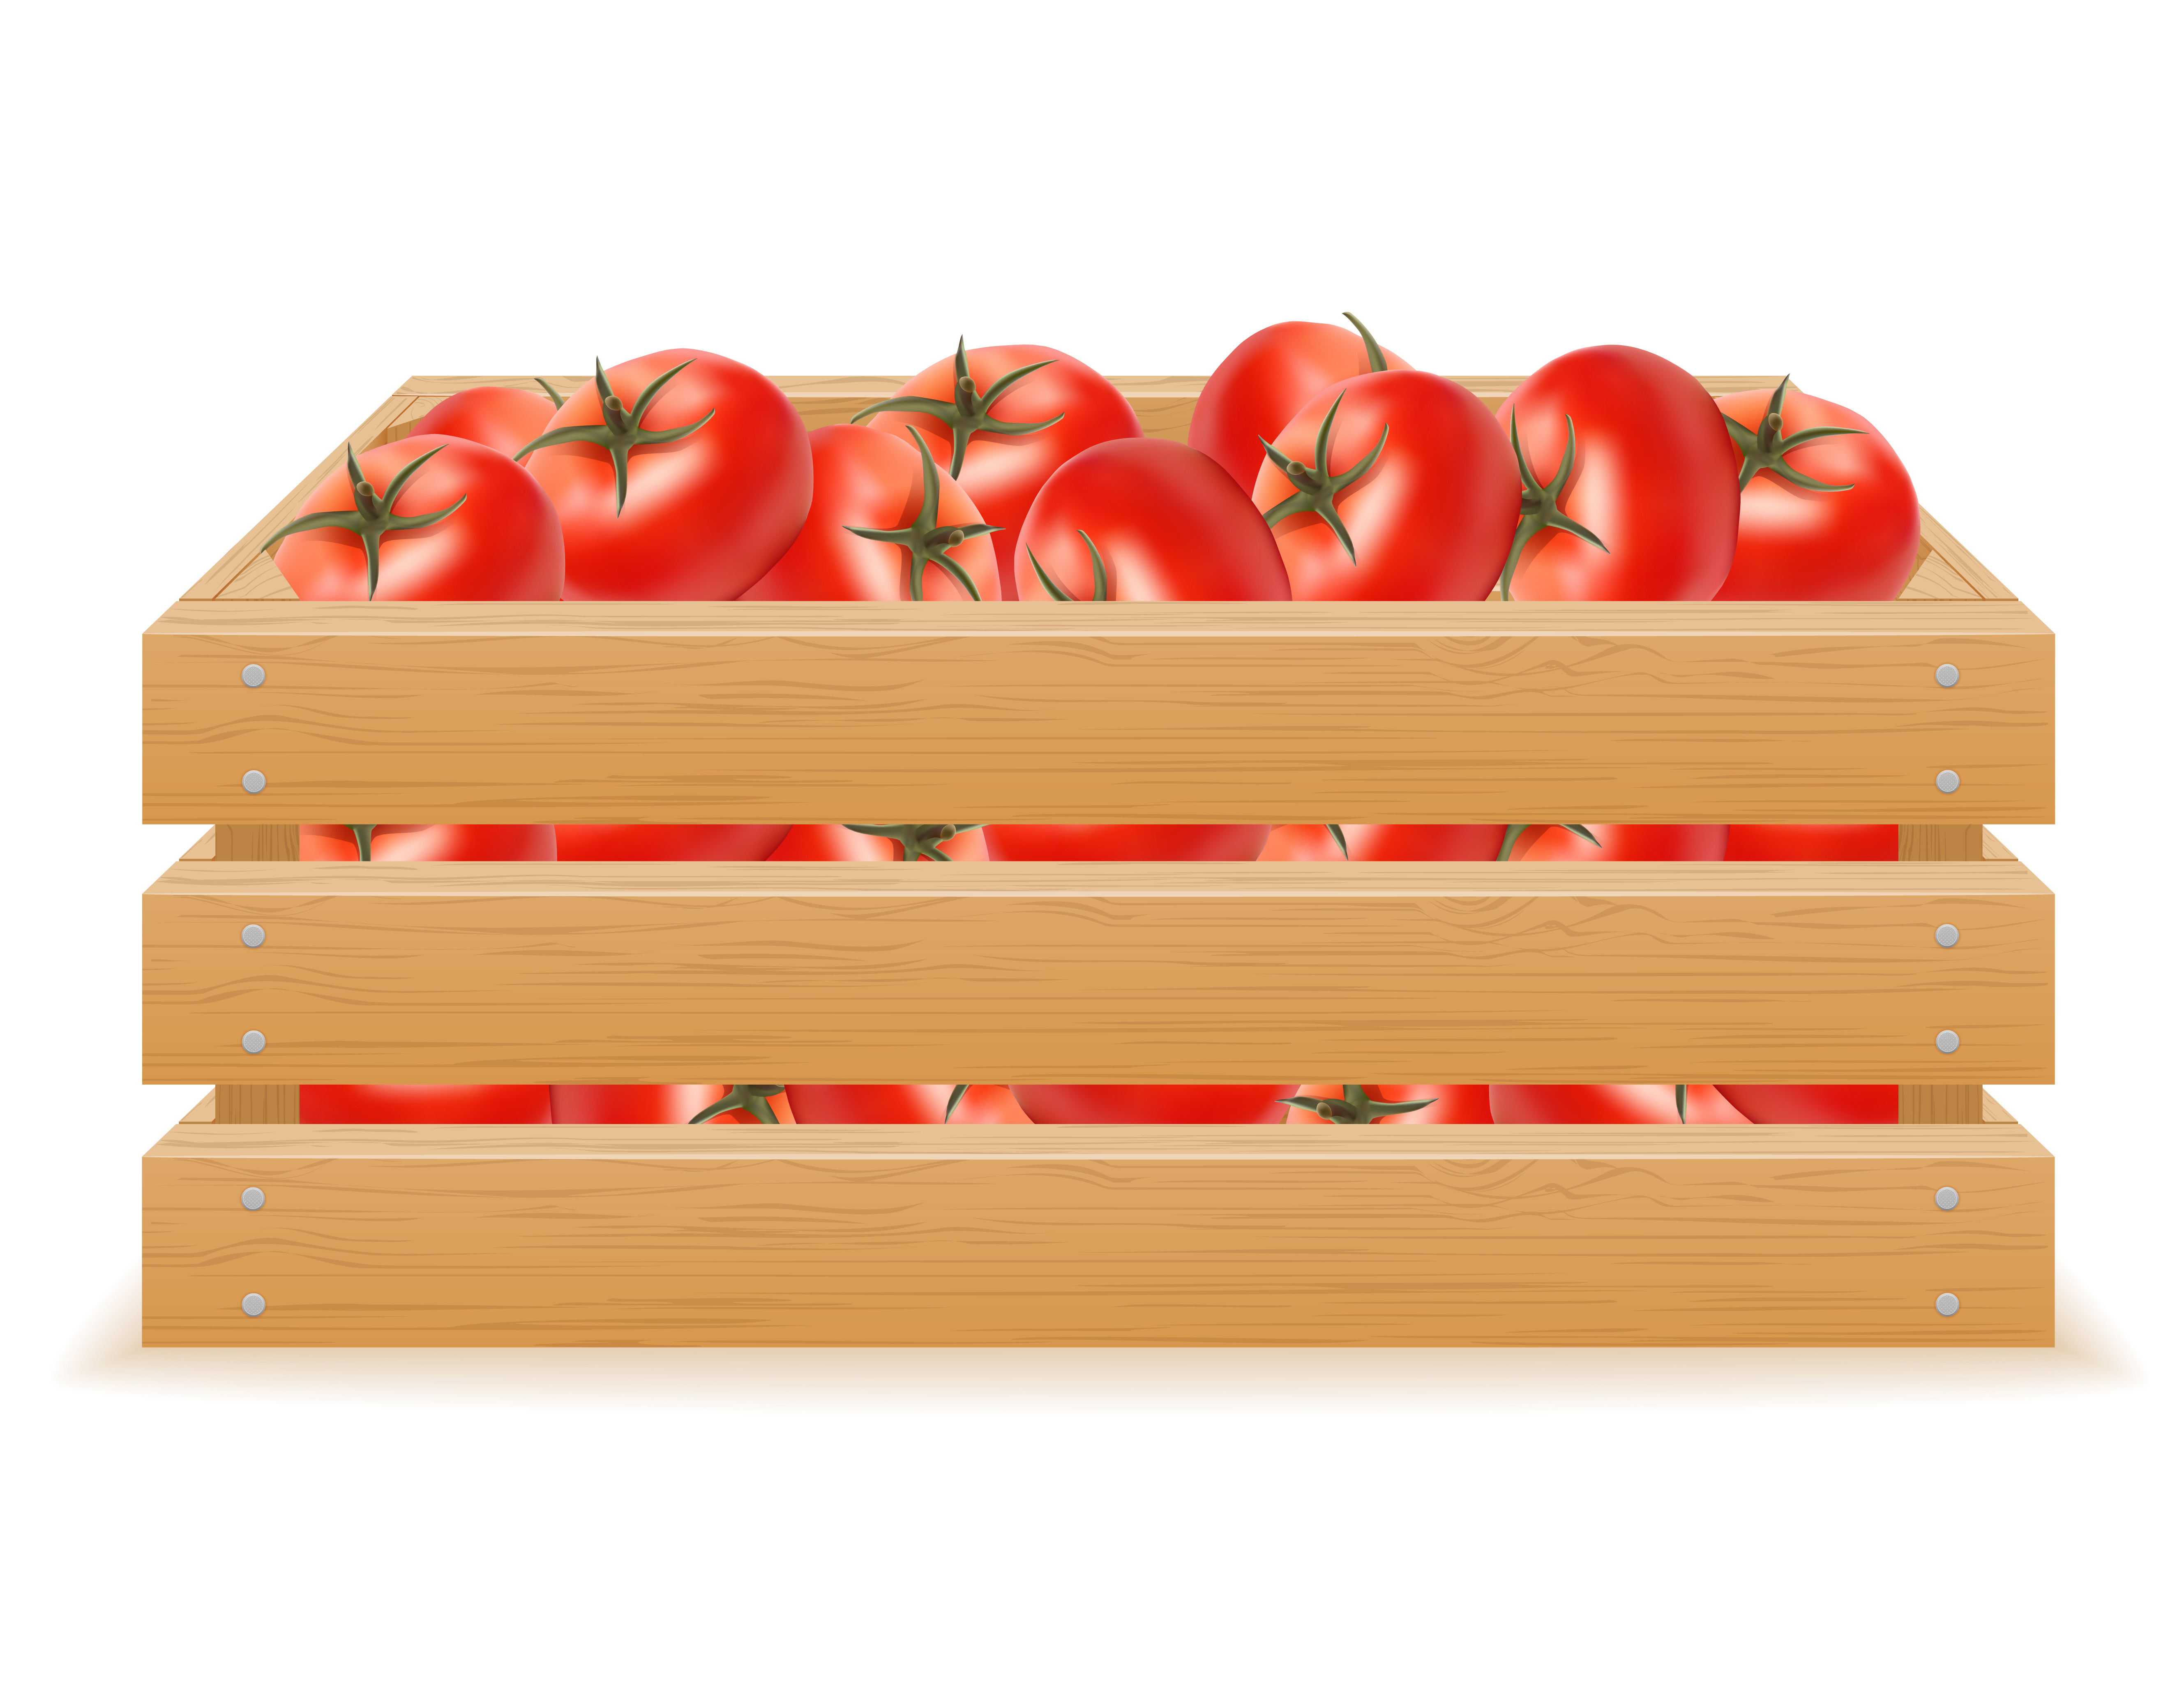 Tomato Box Wooden - KibrisPDR